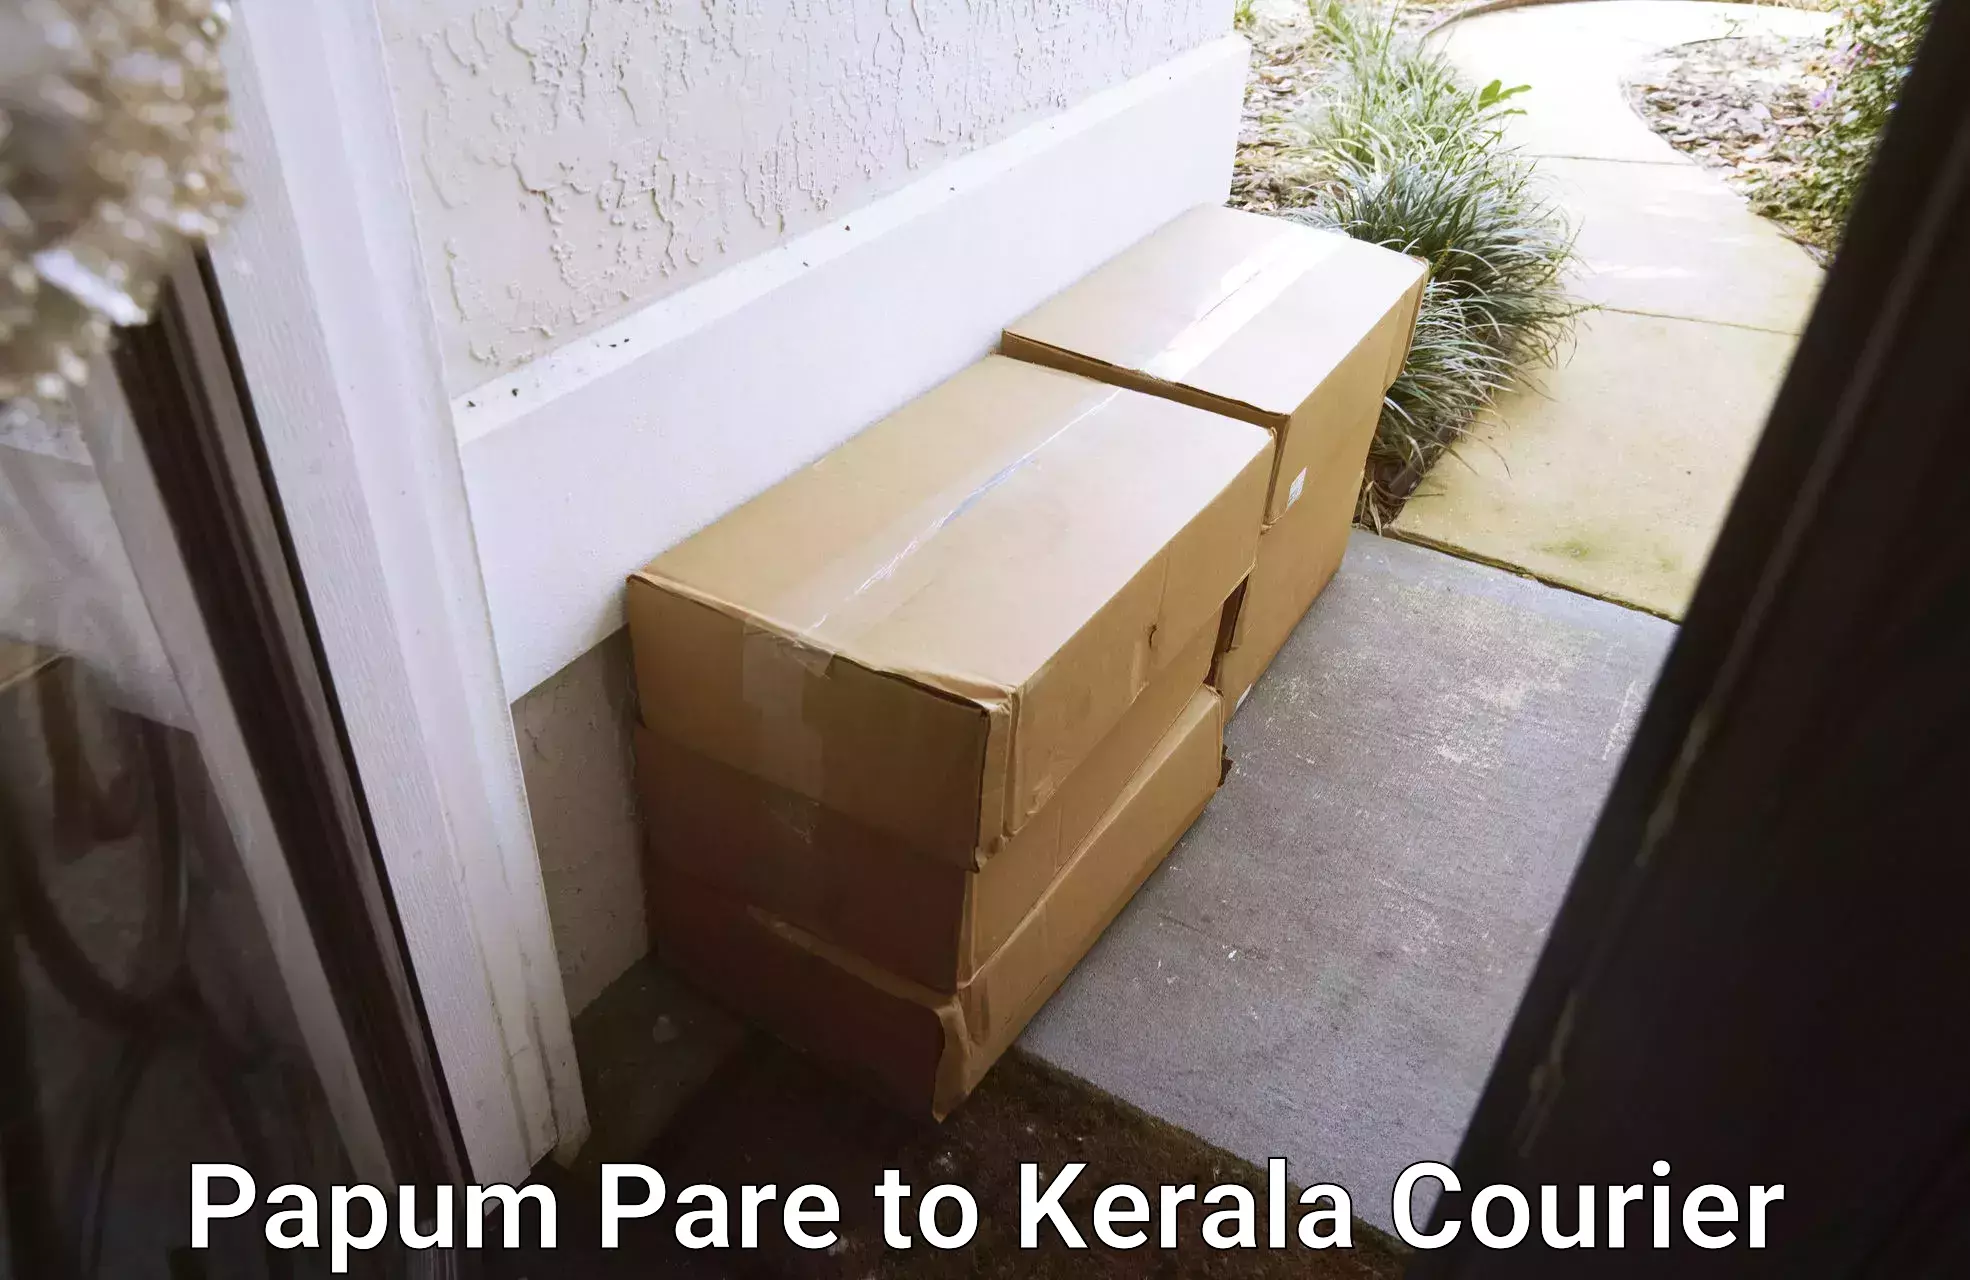 Express logistics providers Papum Pare to Kerala